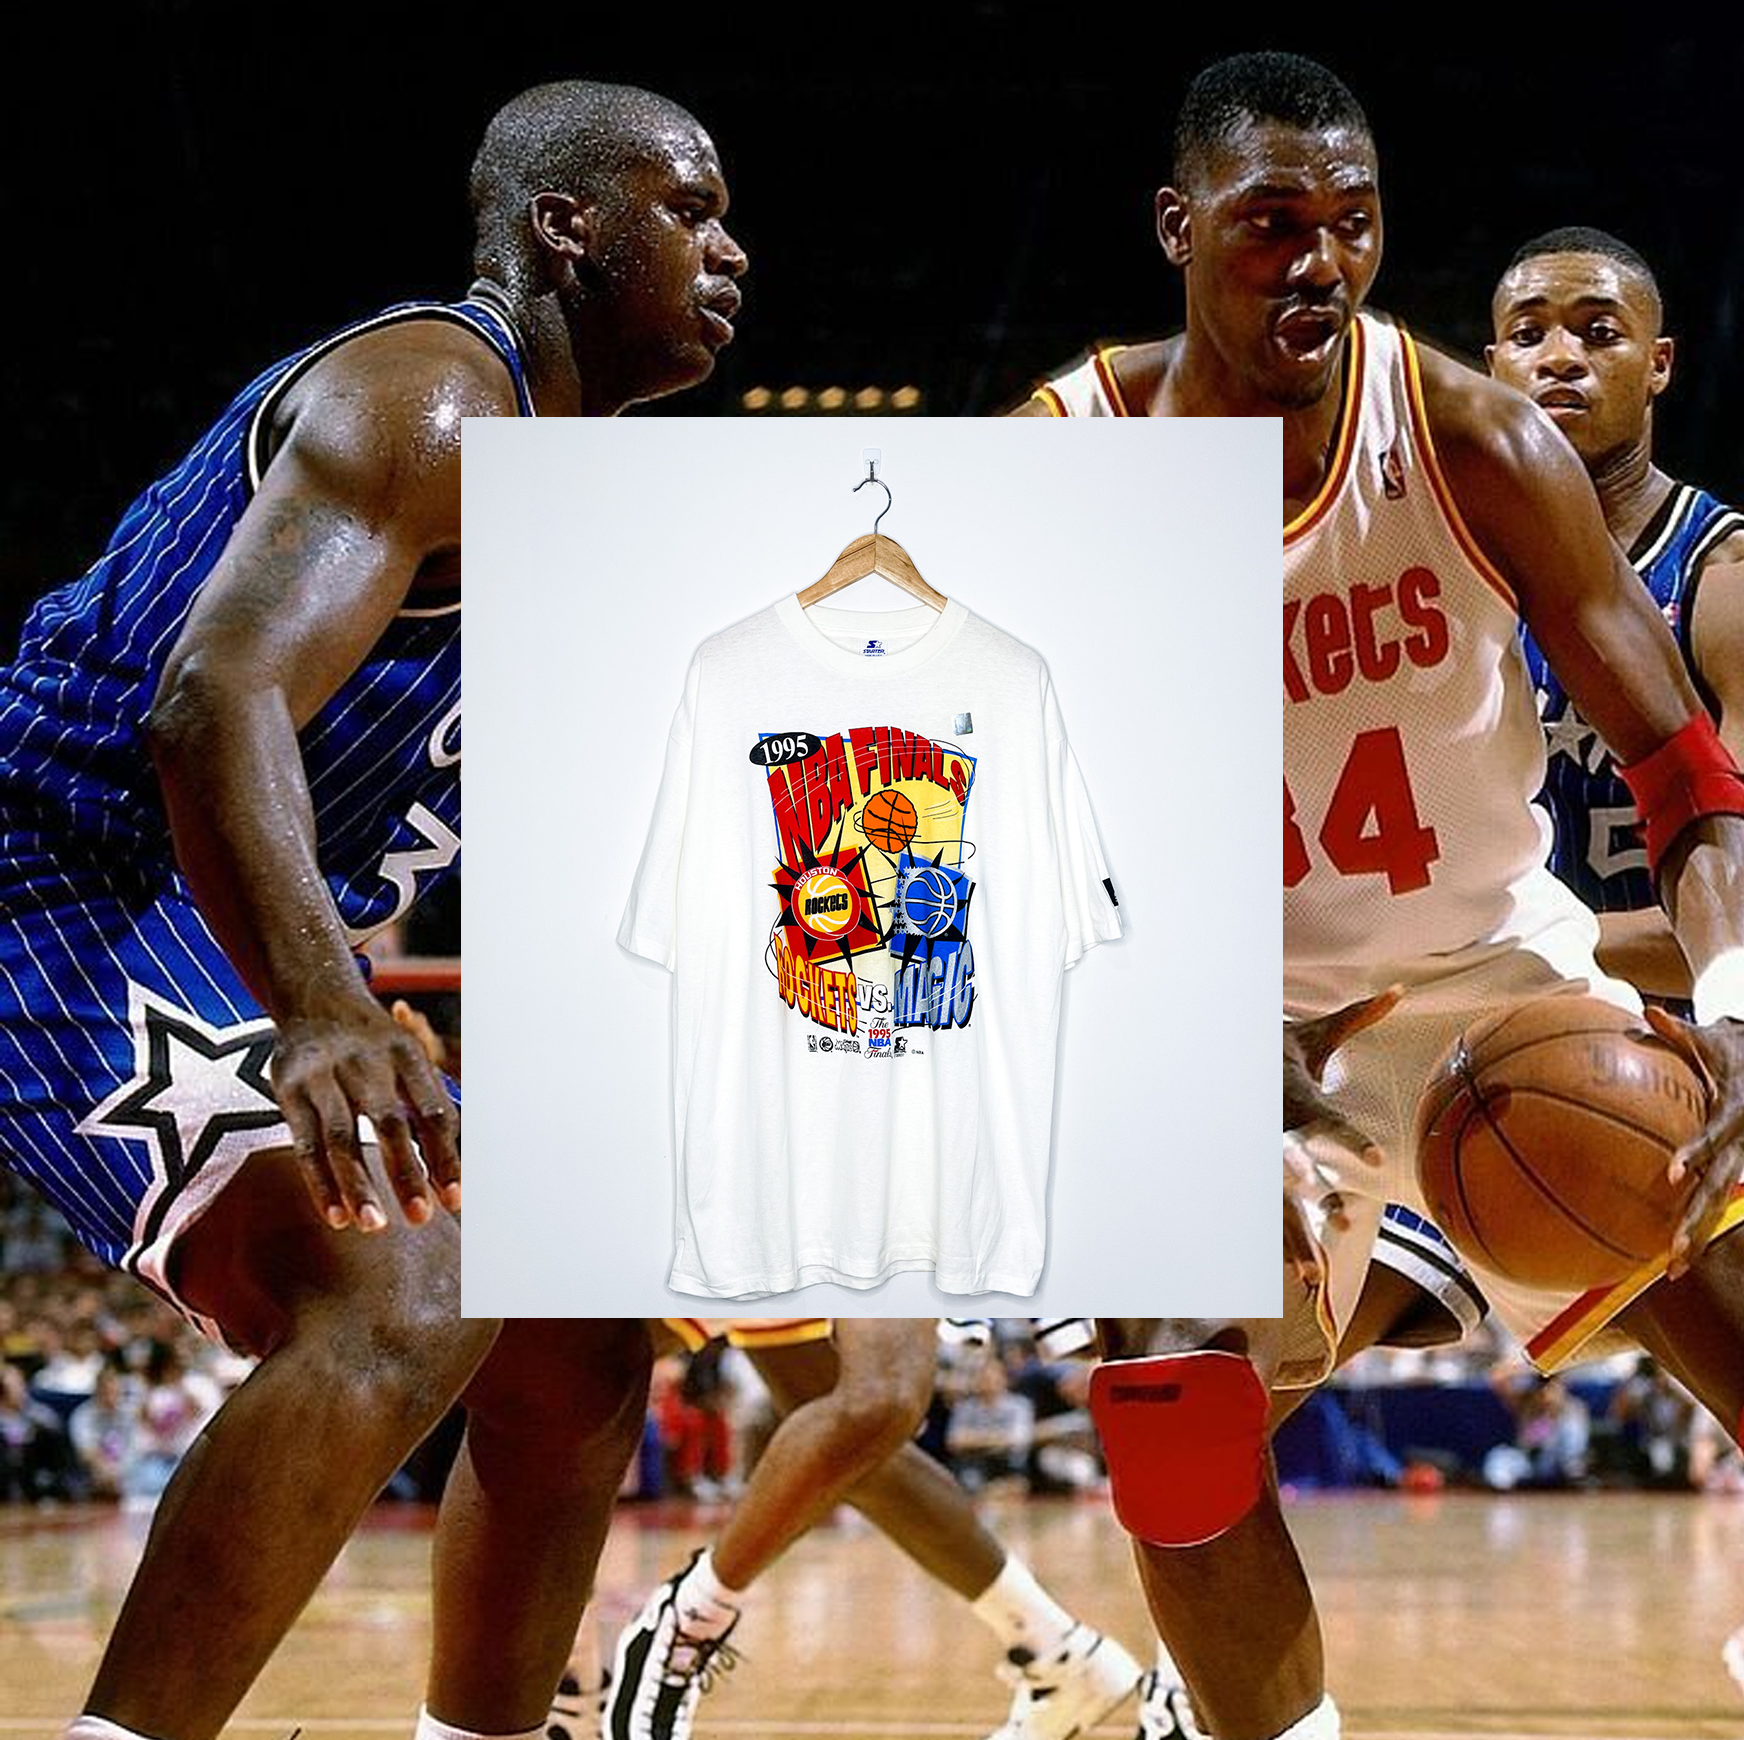 1995 NBA FINALS "Houston Rockets vs Orlando Magic" VINTAGE TEE (Deadstock)